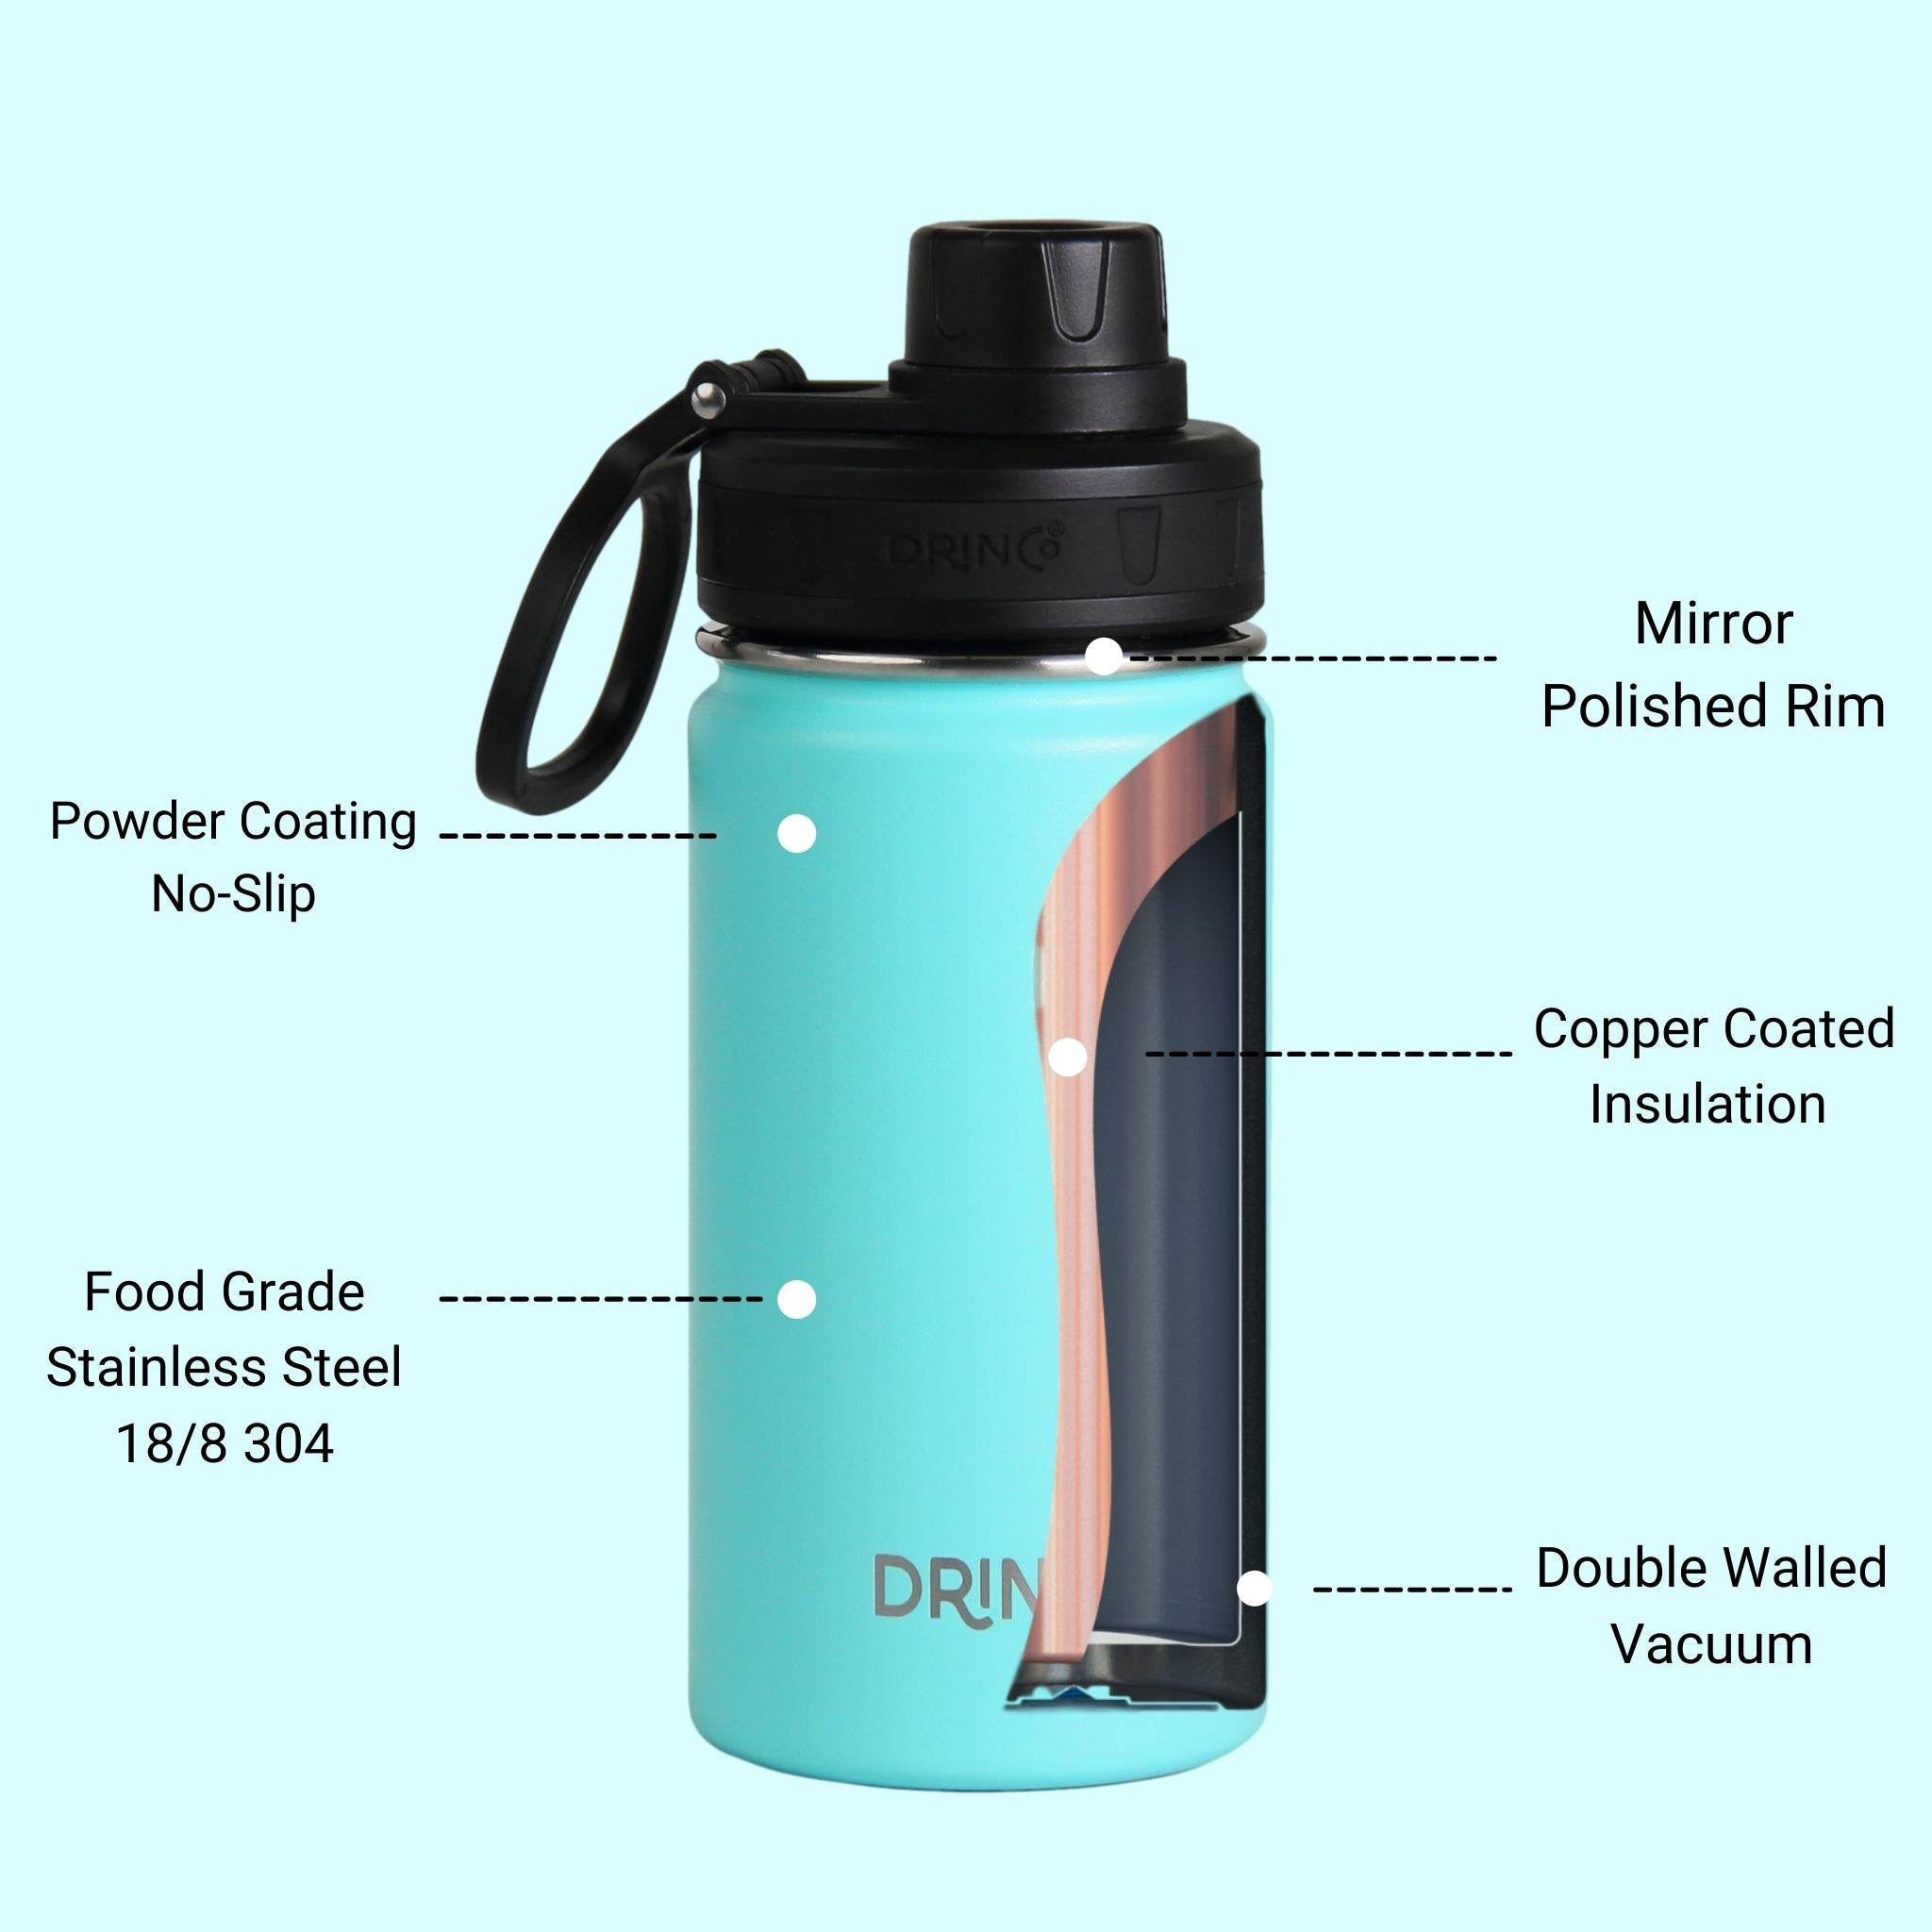 DRINCO® 14oz Stainless Steel Sport Water Bottle - Teal-Sokohewani Ventures